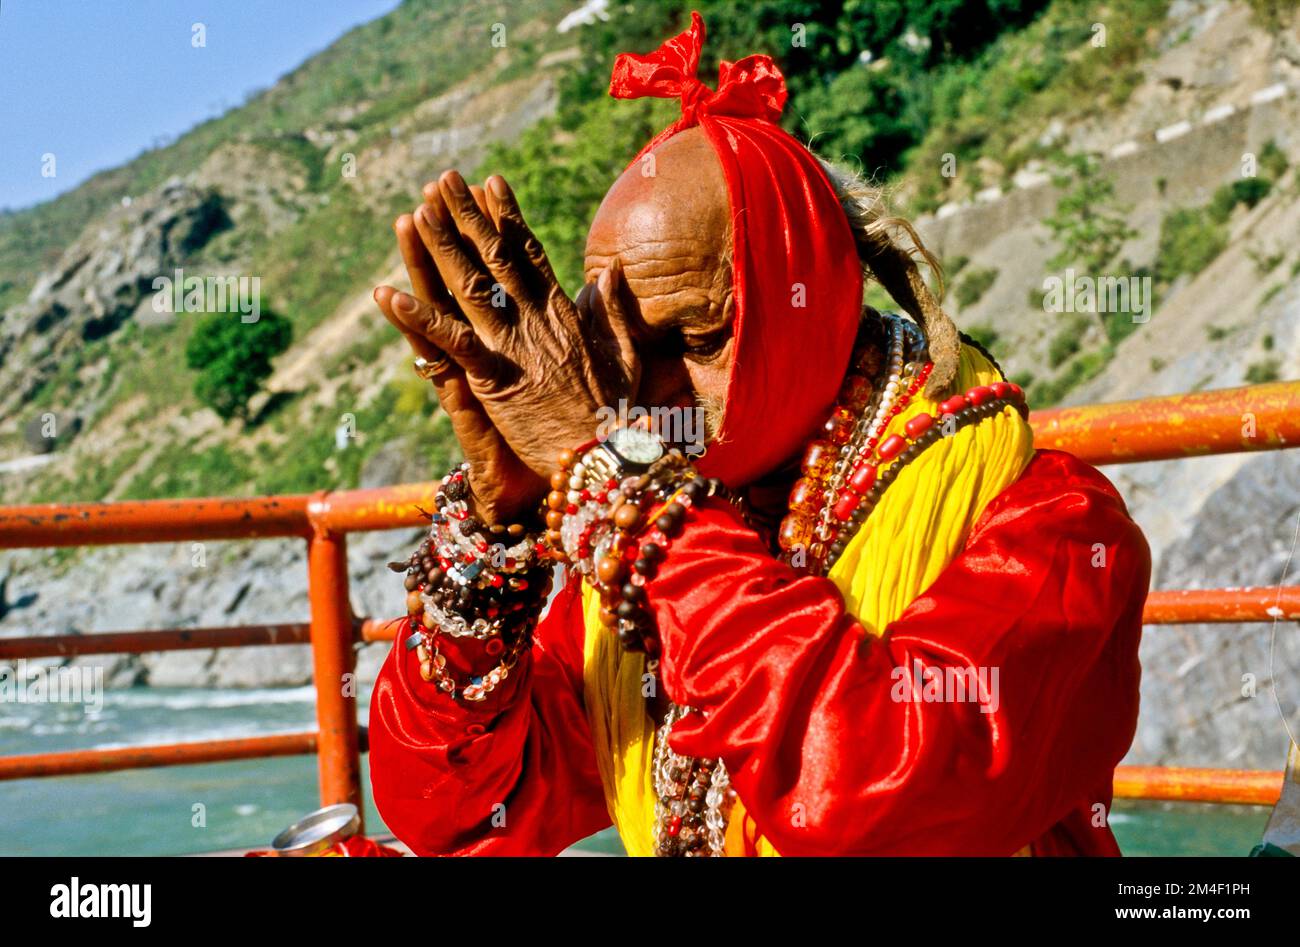 Sadhu, holy man, praying at Devprayag, the confluence of the holy rivers Baghirati and Alakananda.  Devprayag ,  India Stock Photo